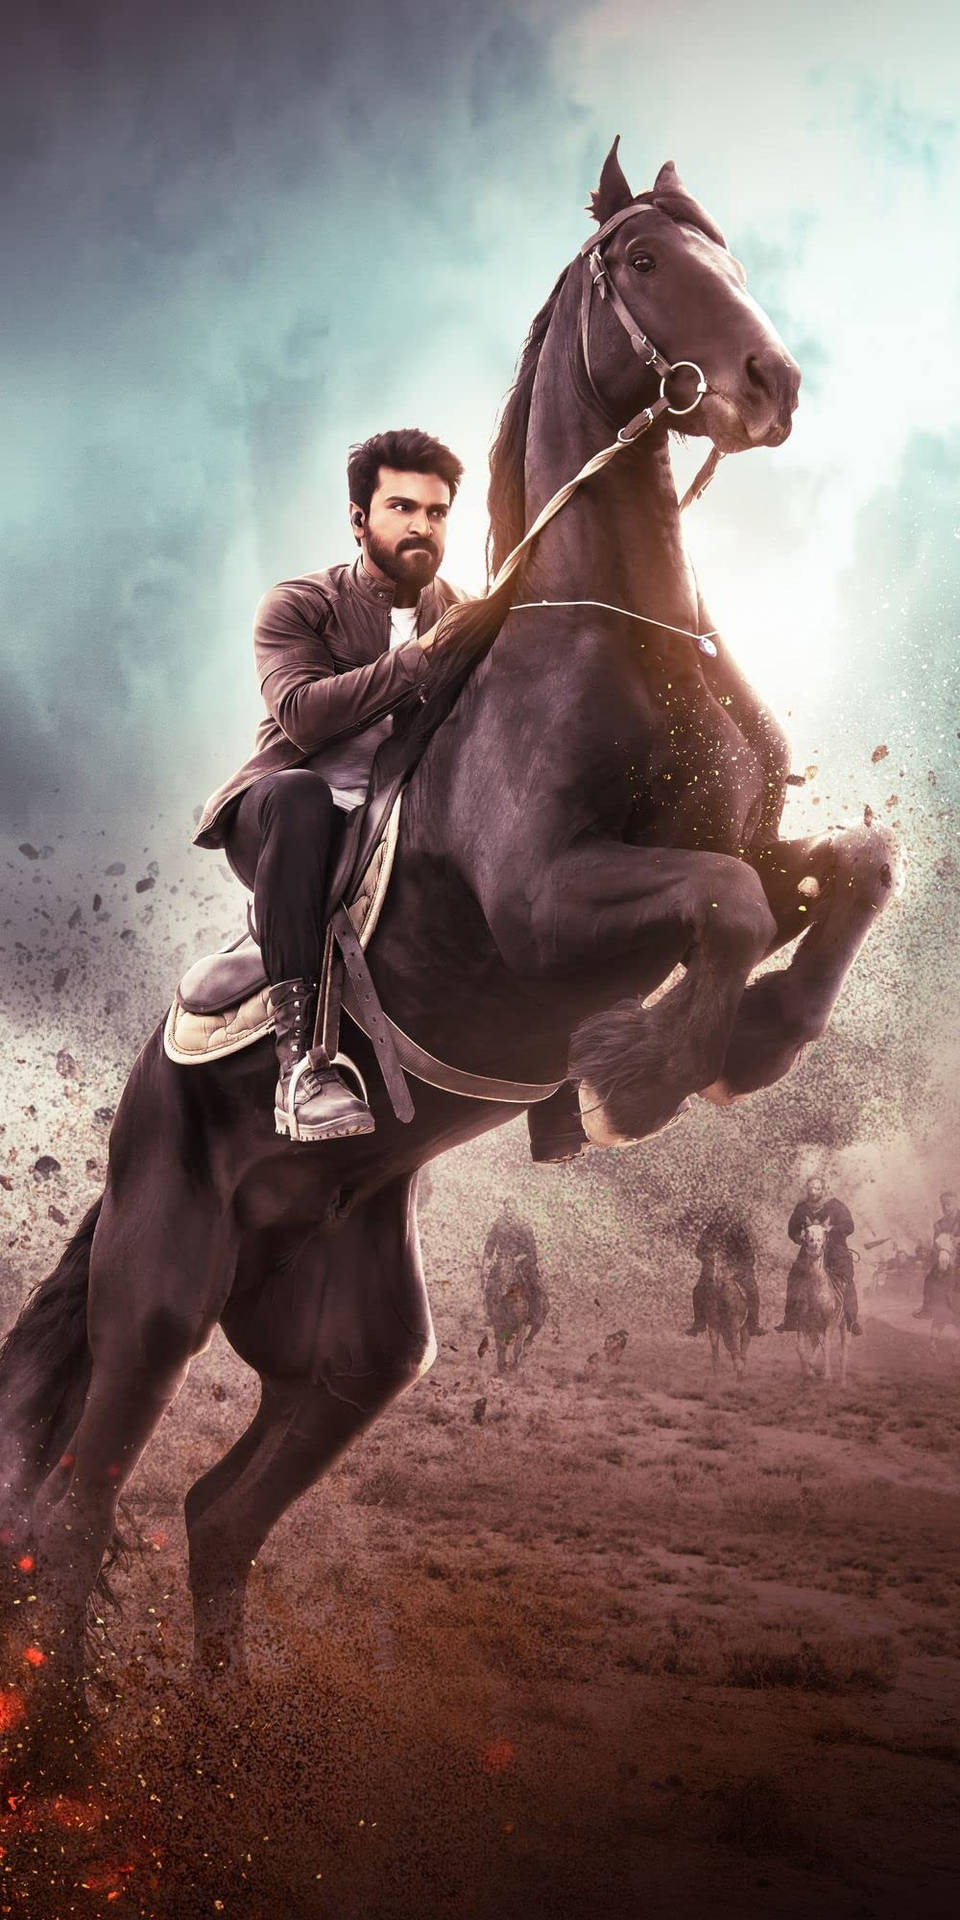 Ram Charan rider en hest gennem havet. Wallpaper